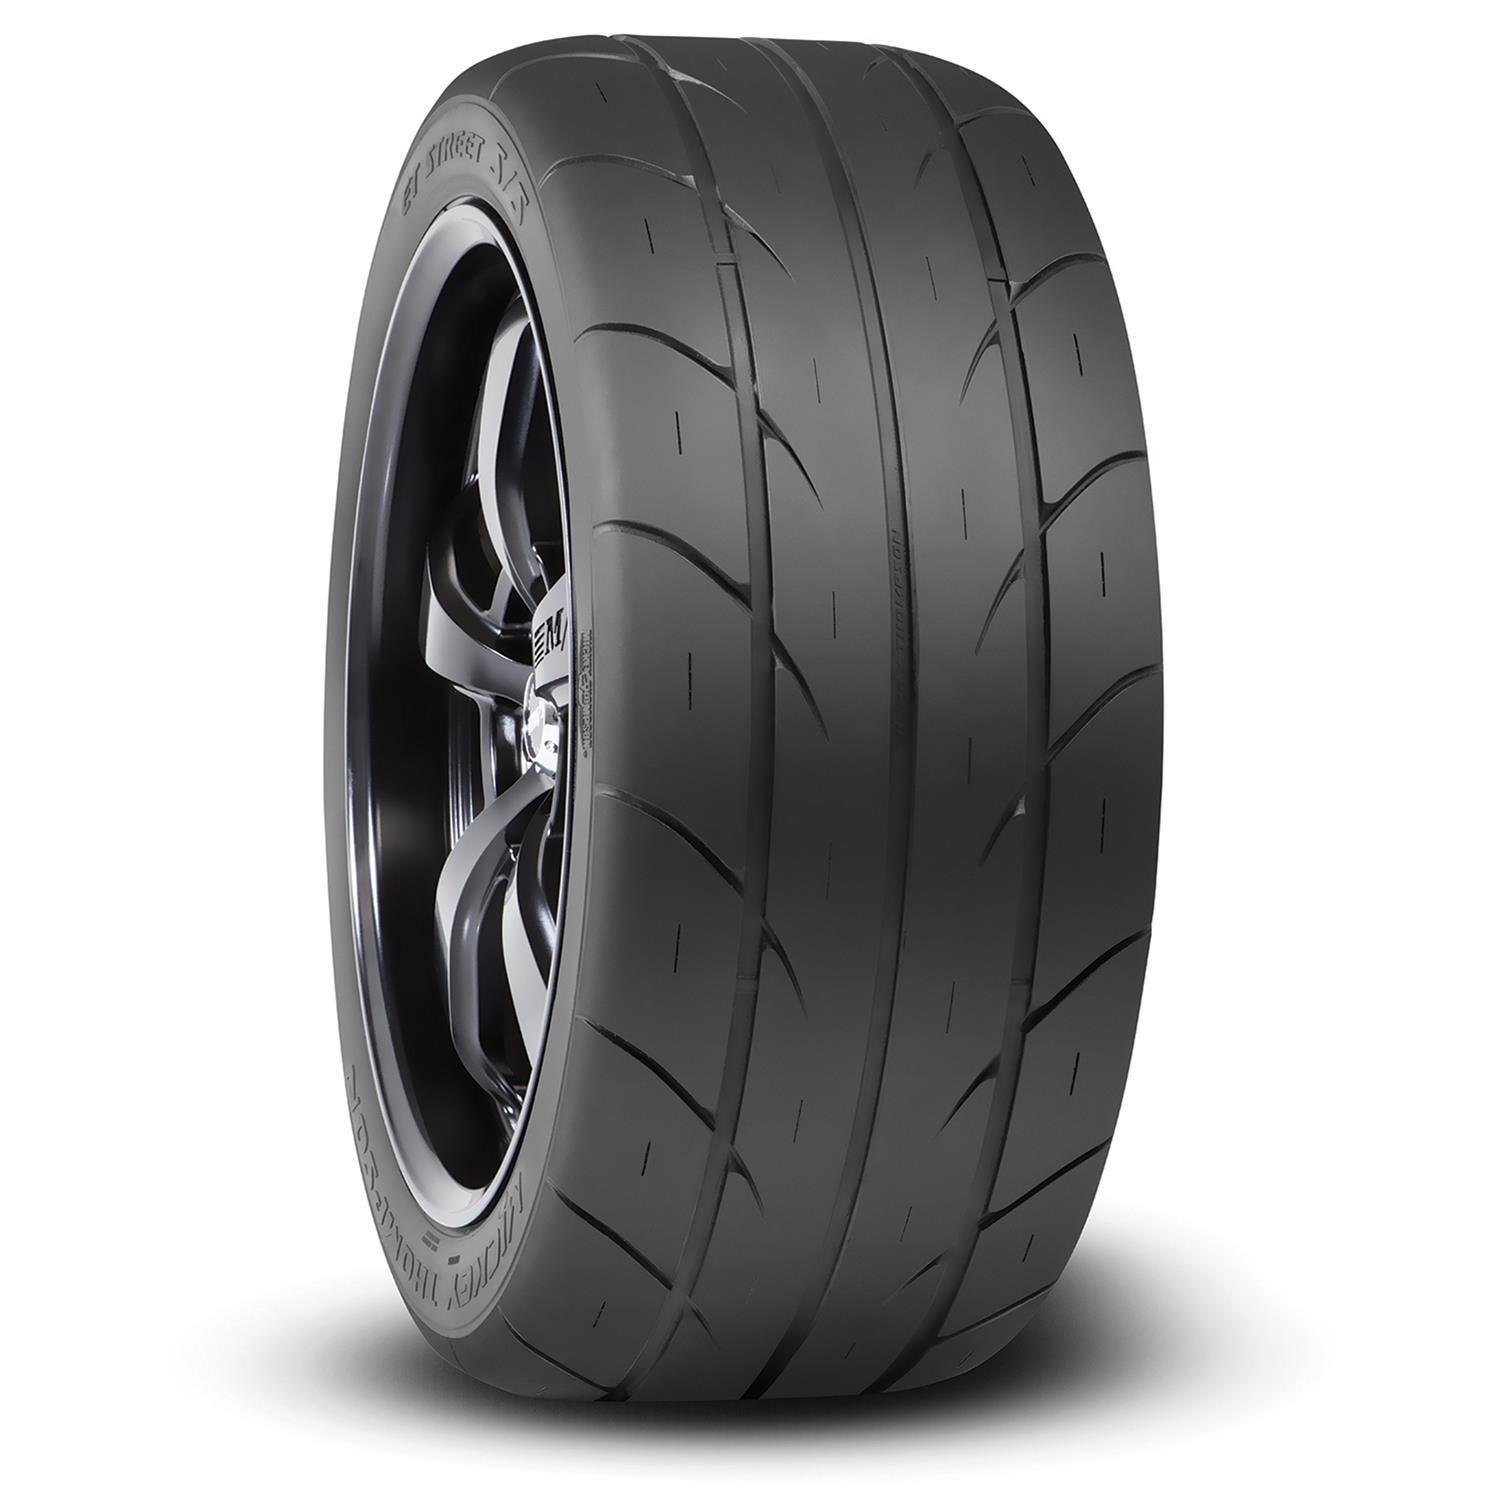 P275/45R18 ET Street S/S Tire - Burlile Performance Products